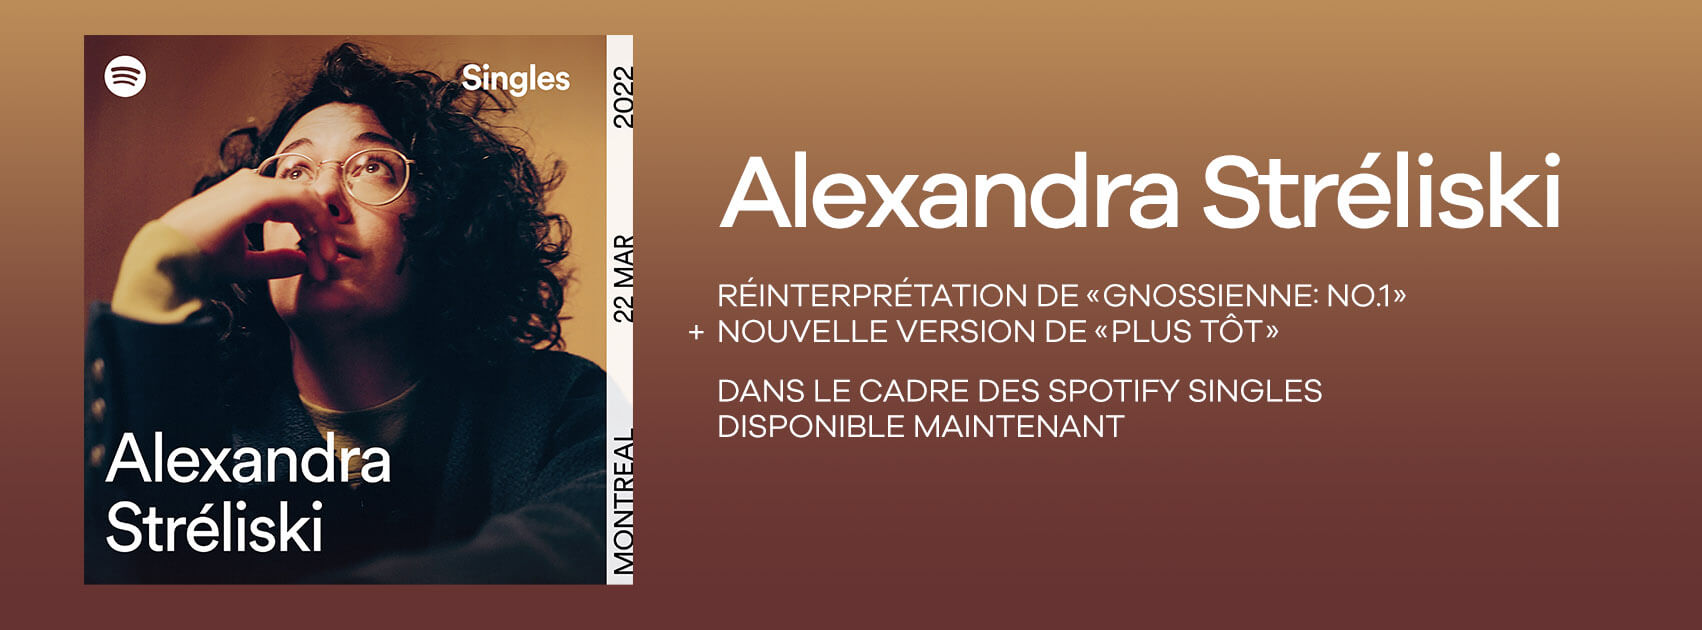 AlexandraStreliski-SpotifySingles-SCRWebsite-FR